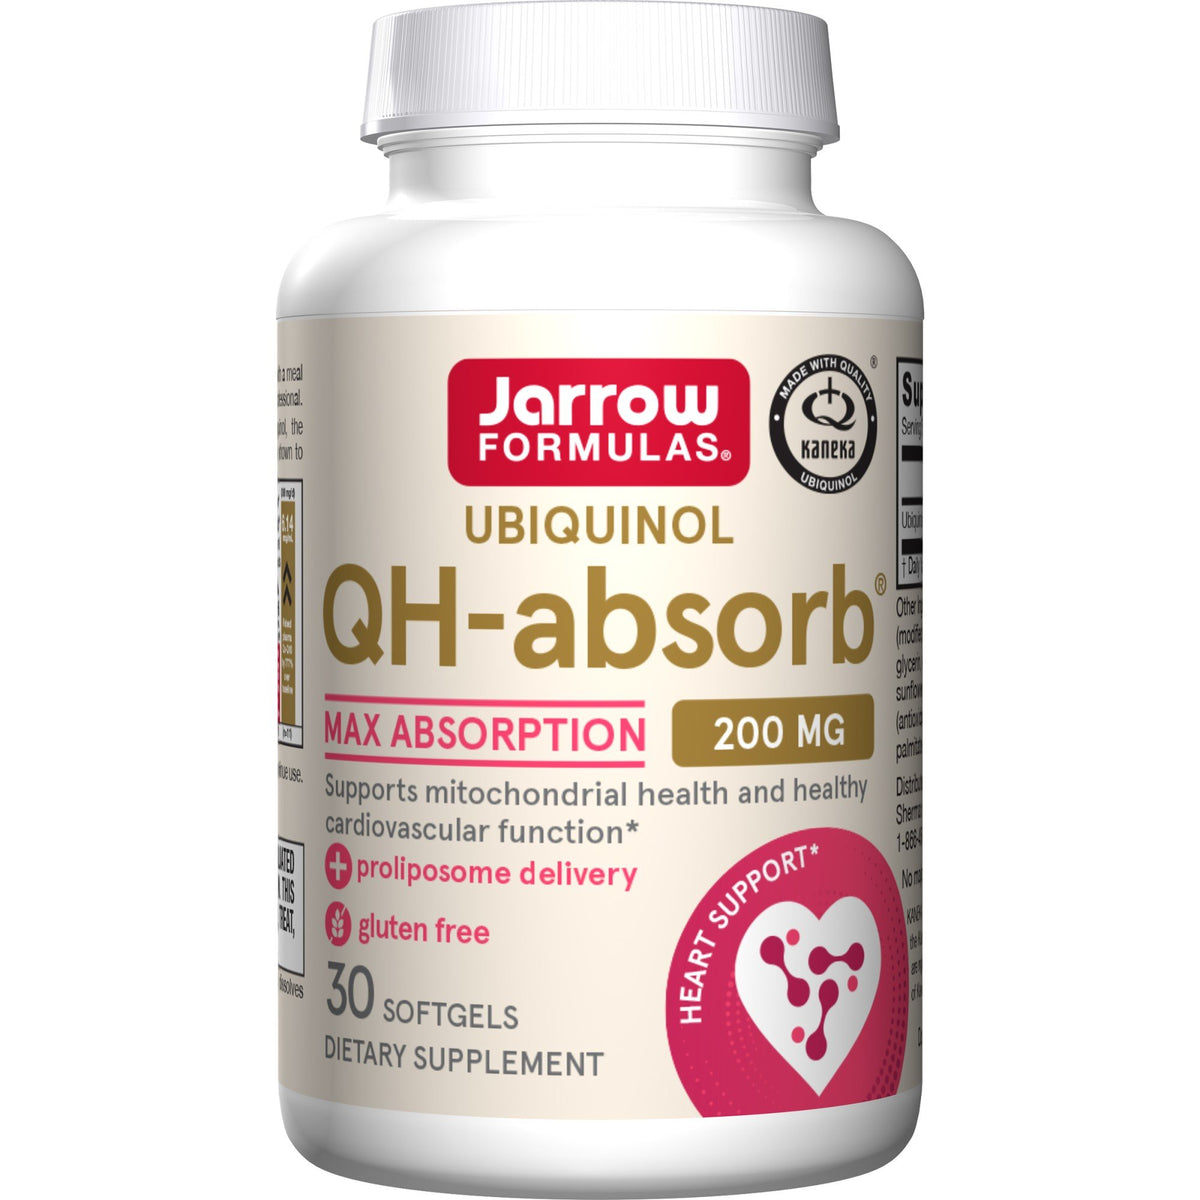 Jarrow Formulas Ubiquinol QH-absorb 200 mg 30 Softgel